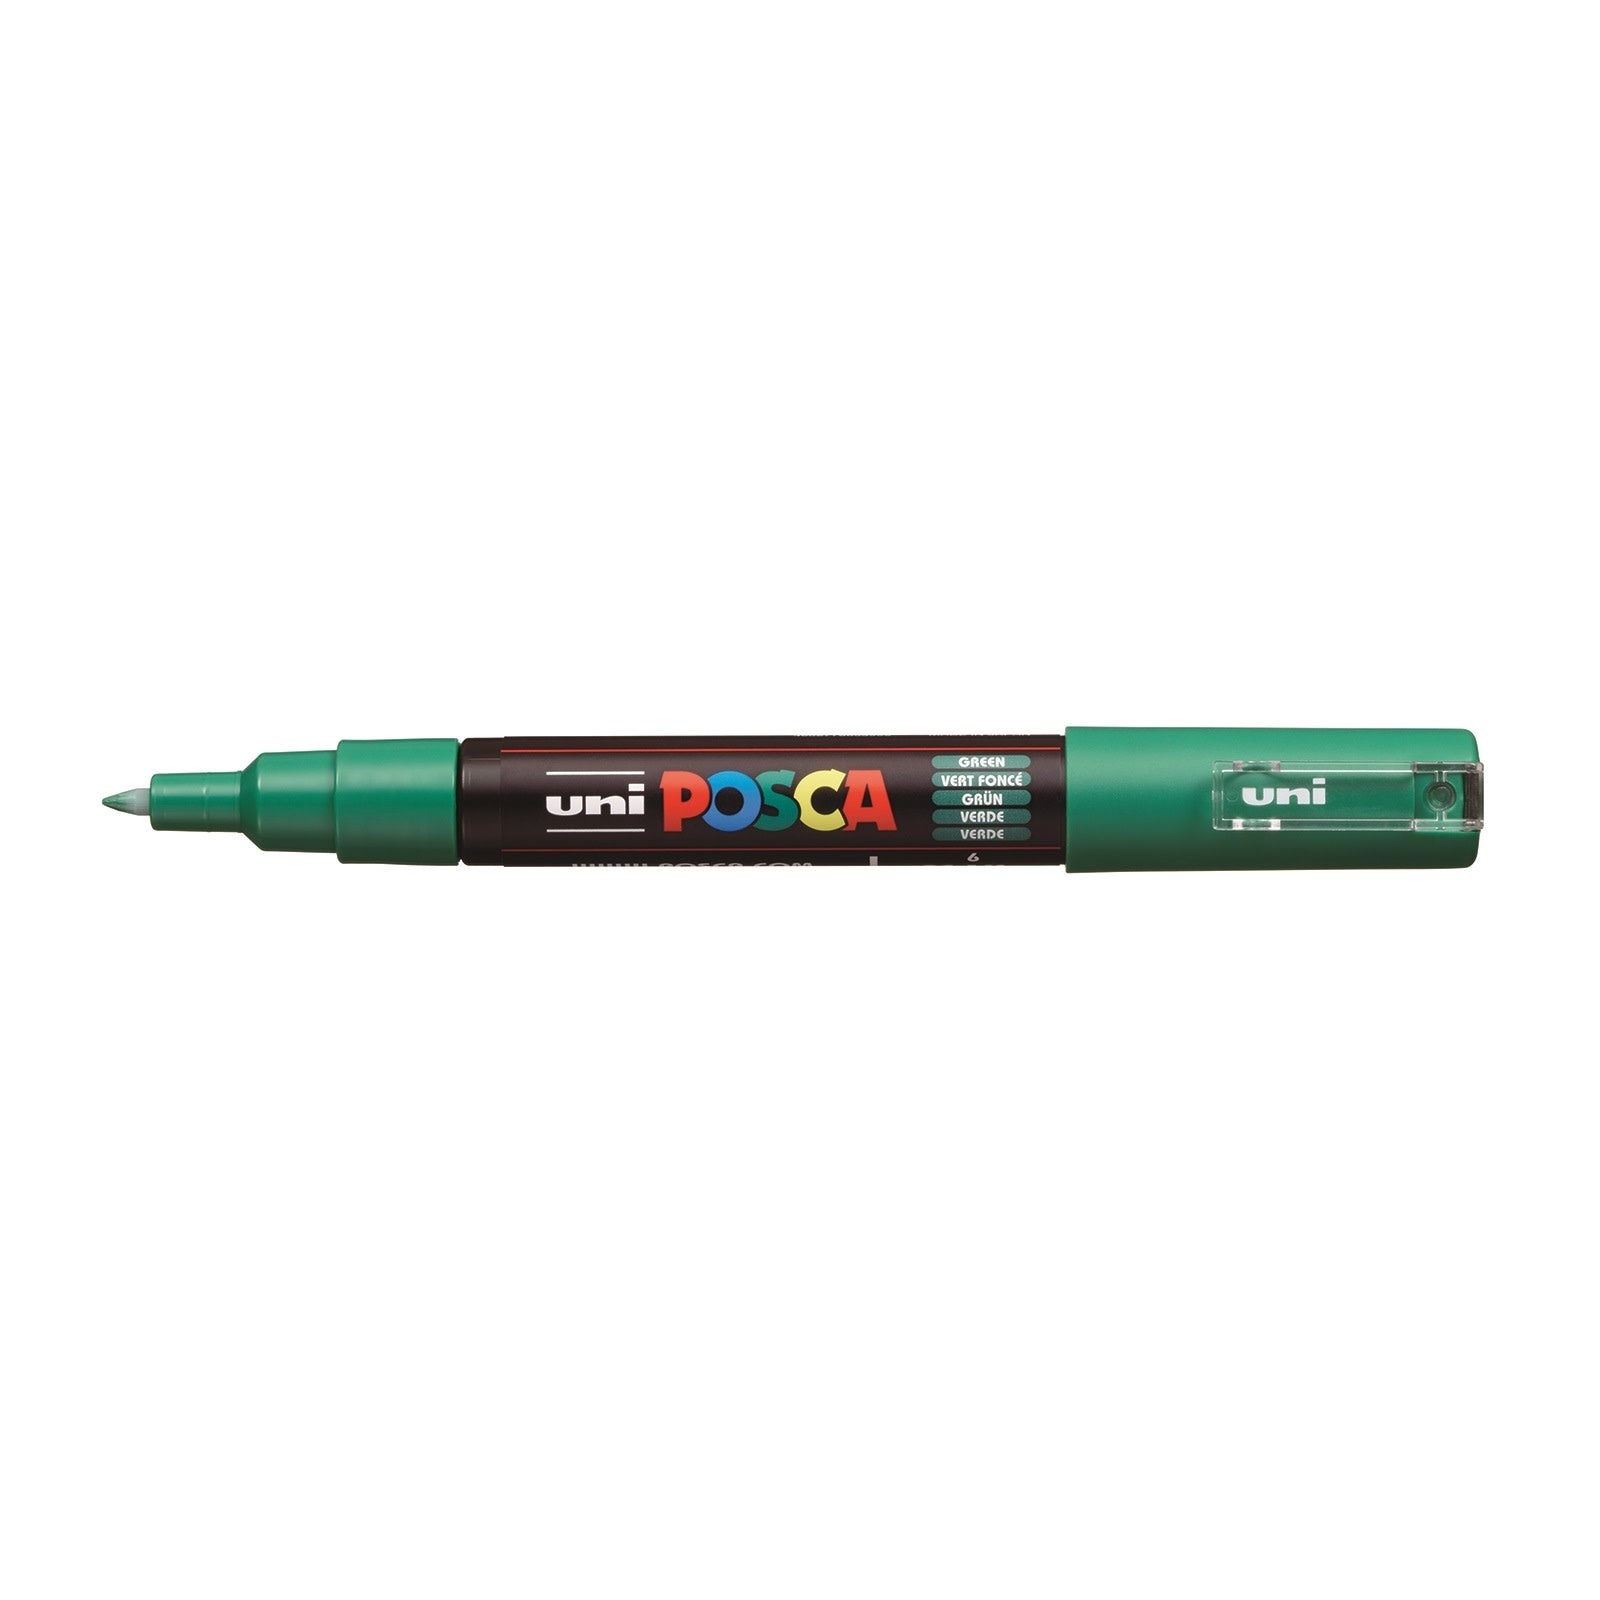 POSCA Acrylic Paint Markers - PC-1M / 0.7mm - Green by POSCA - K. A. Artist Shop